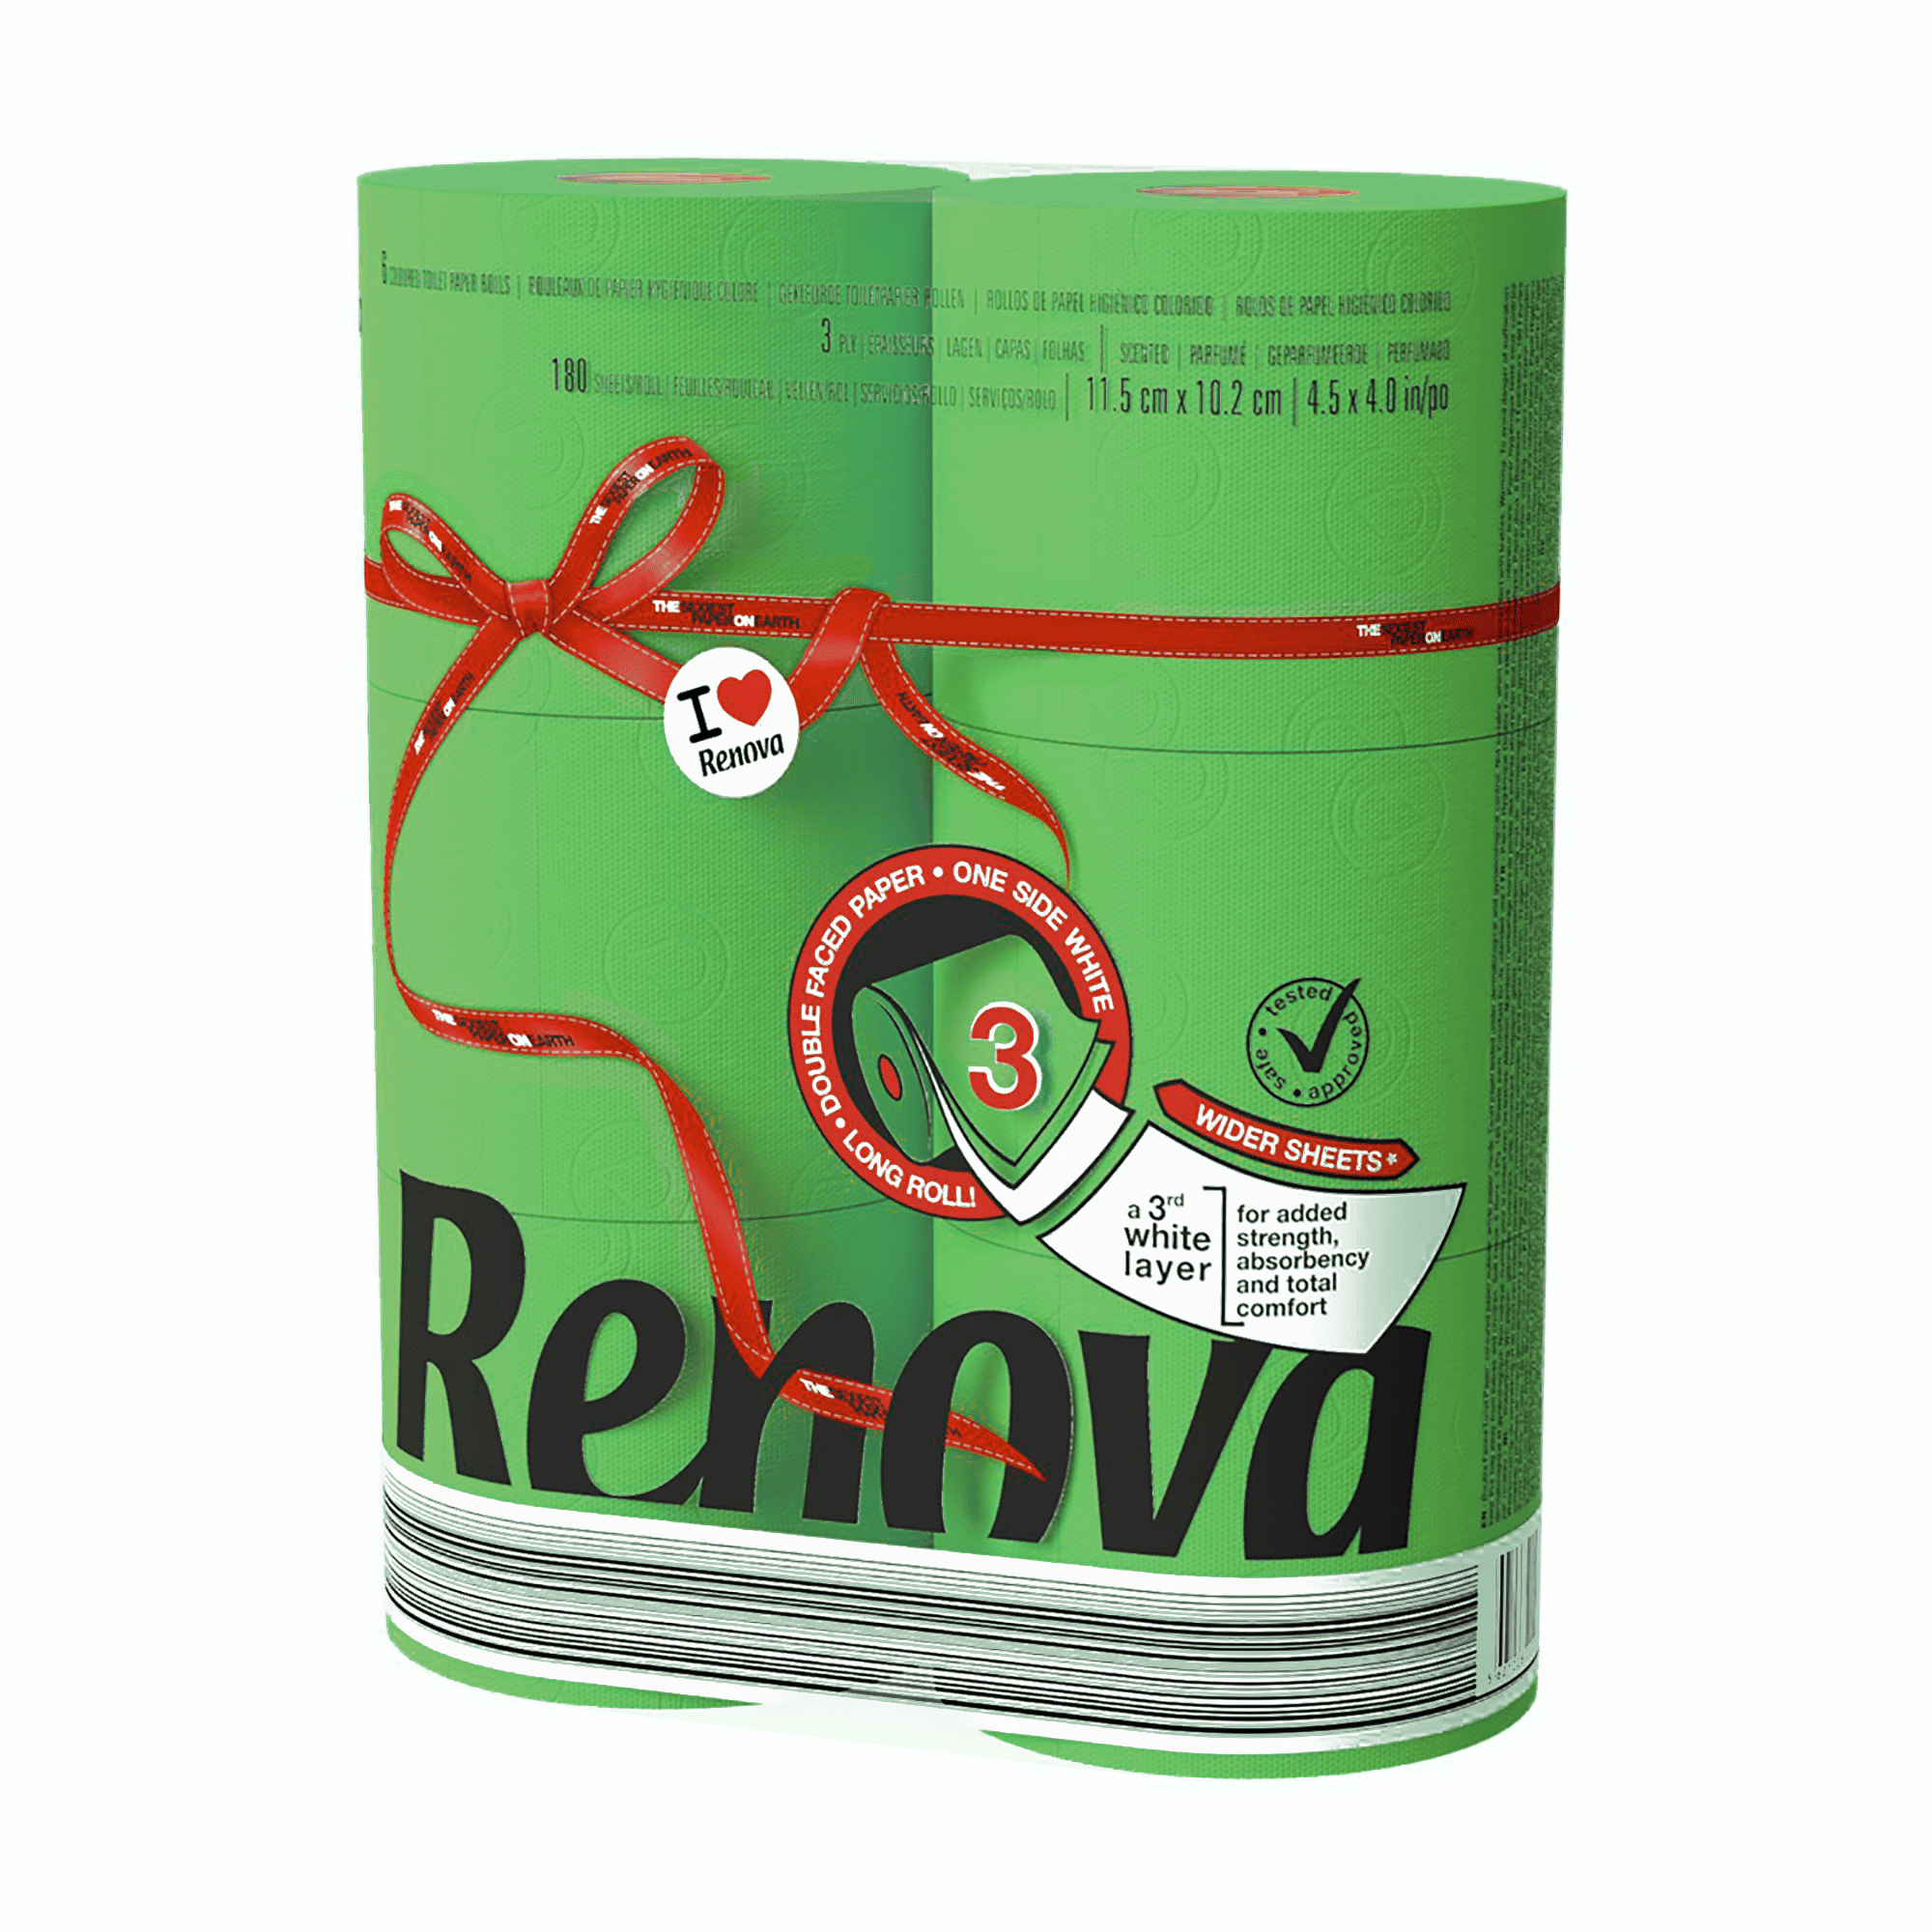 Papier toilette Renova Green maxi jumbo - Carton de 9 rouleaux